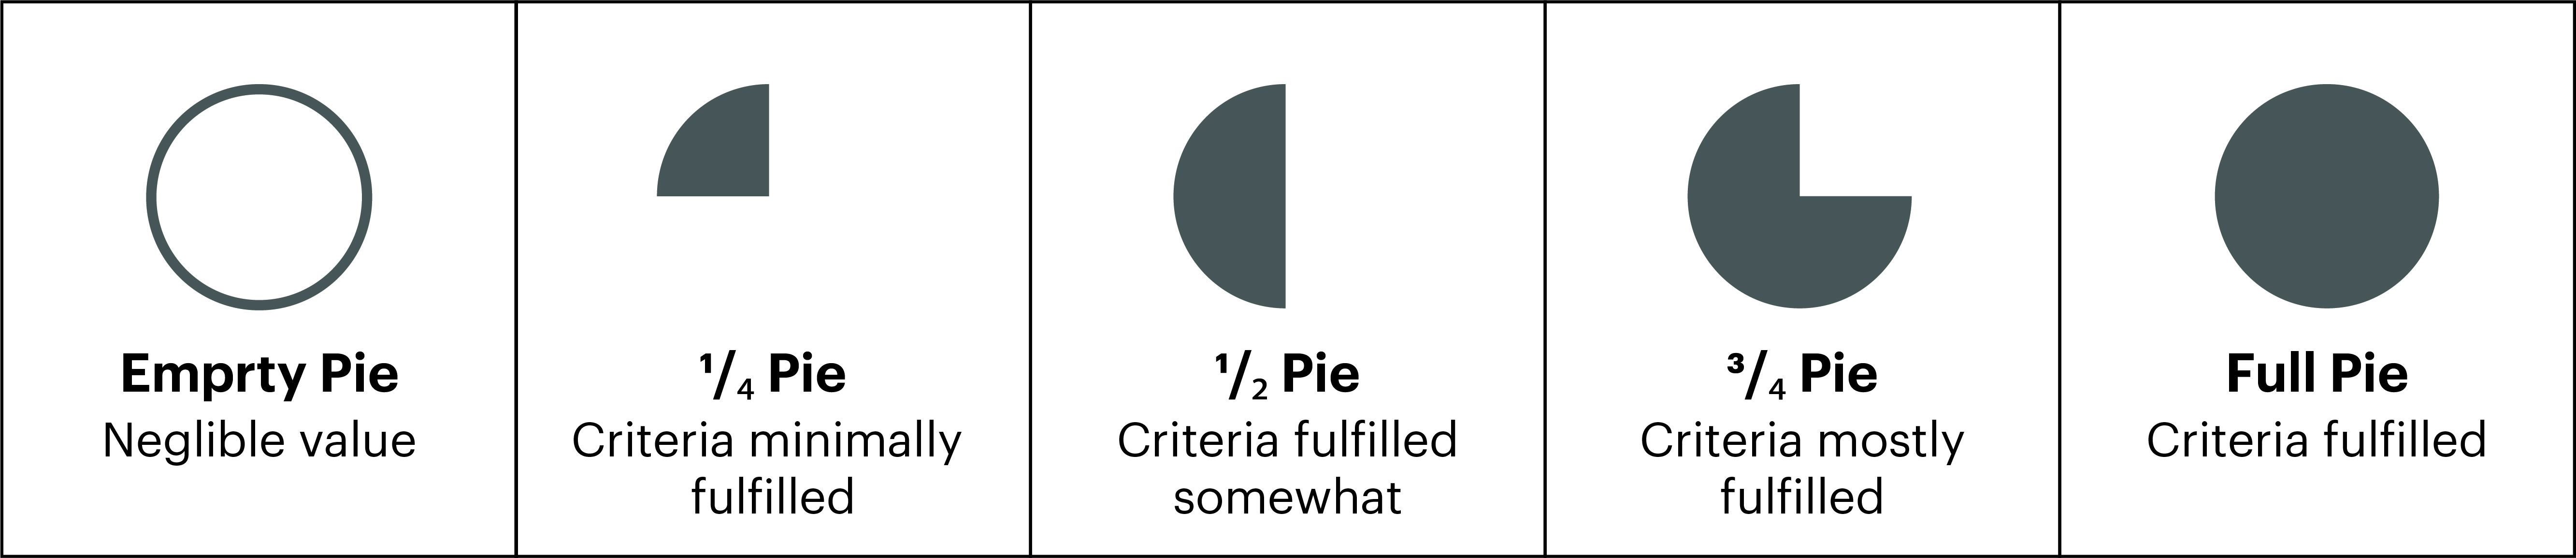 Pie Comparison